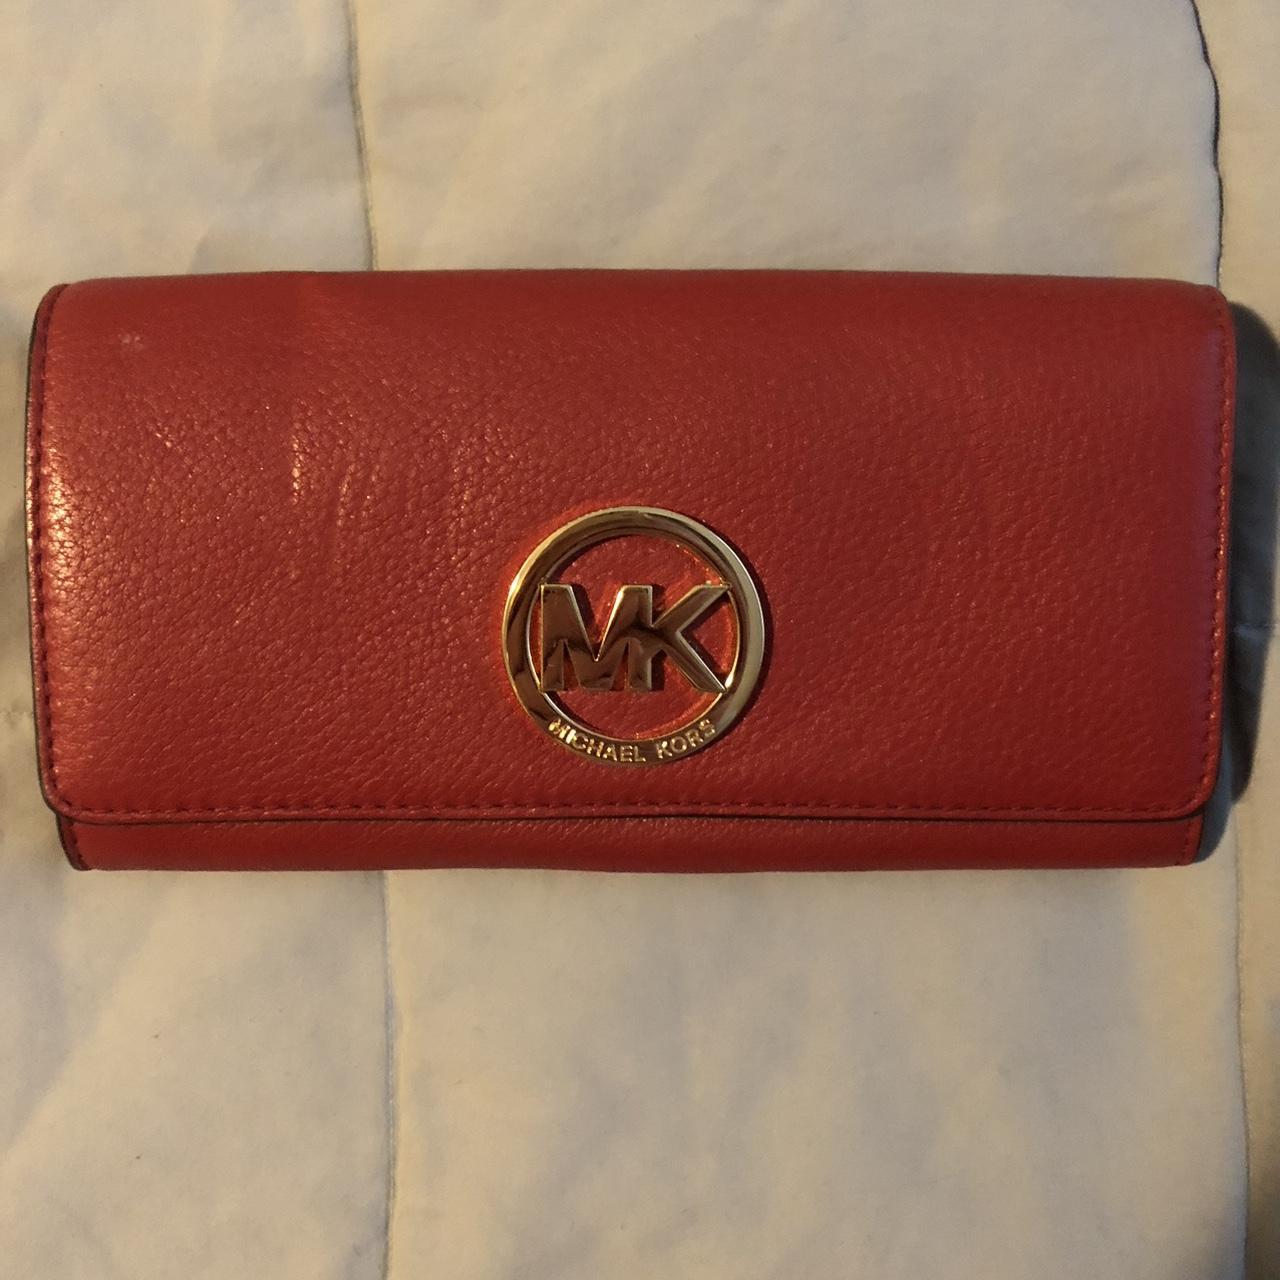 Michael Kors Women's Wallets - Red